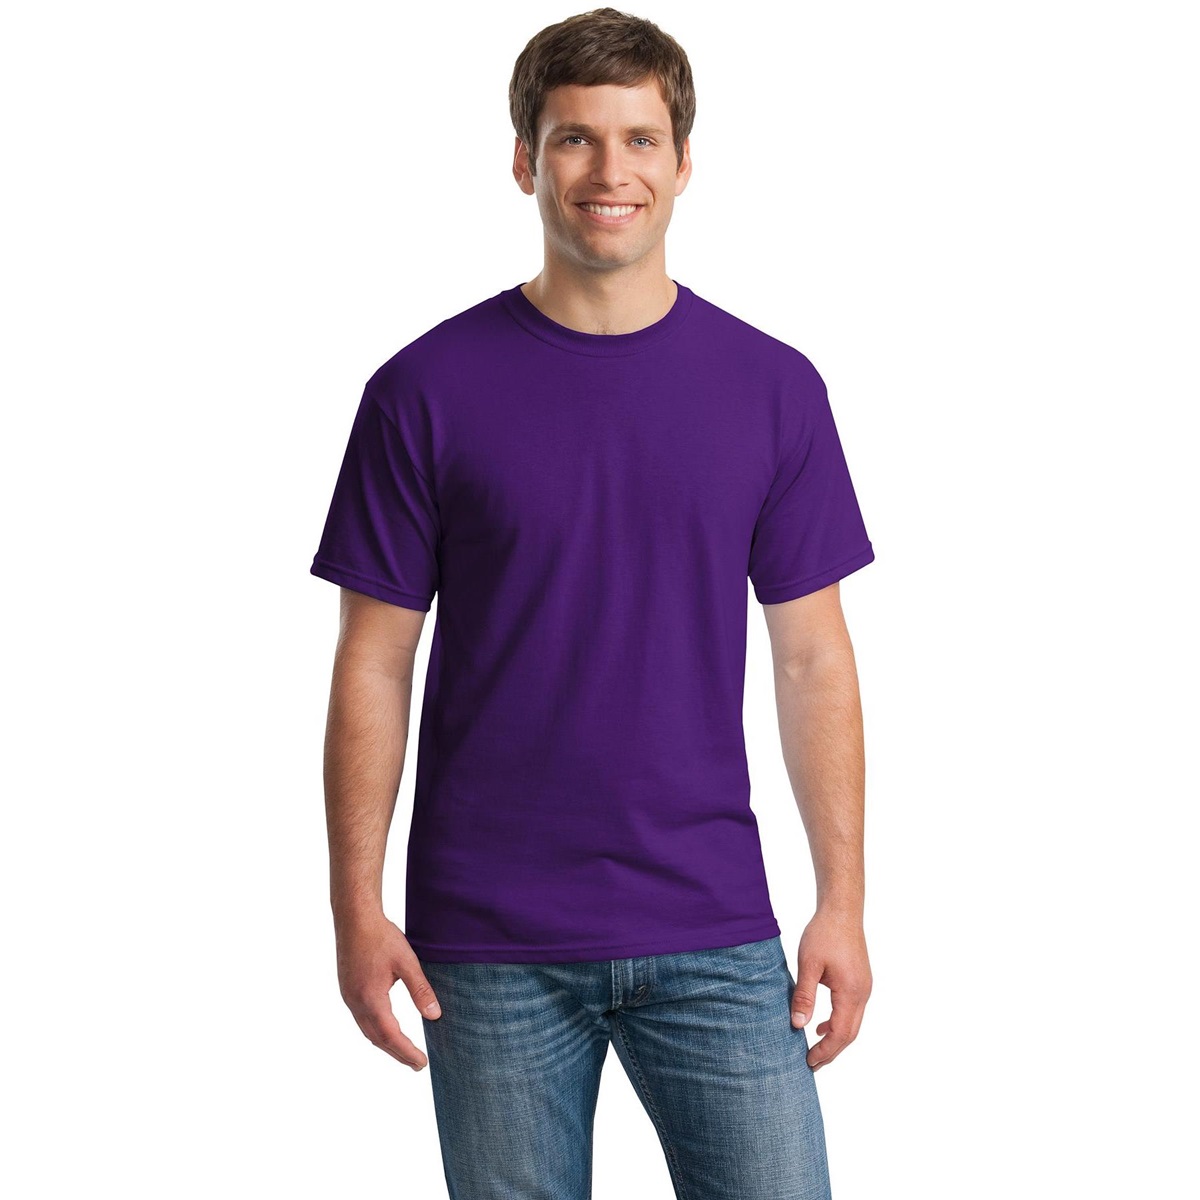 purple tee shirt